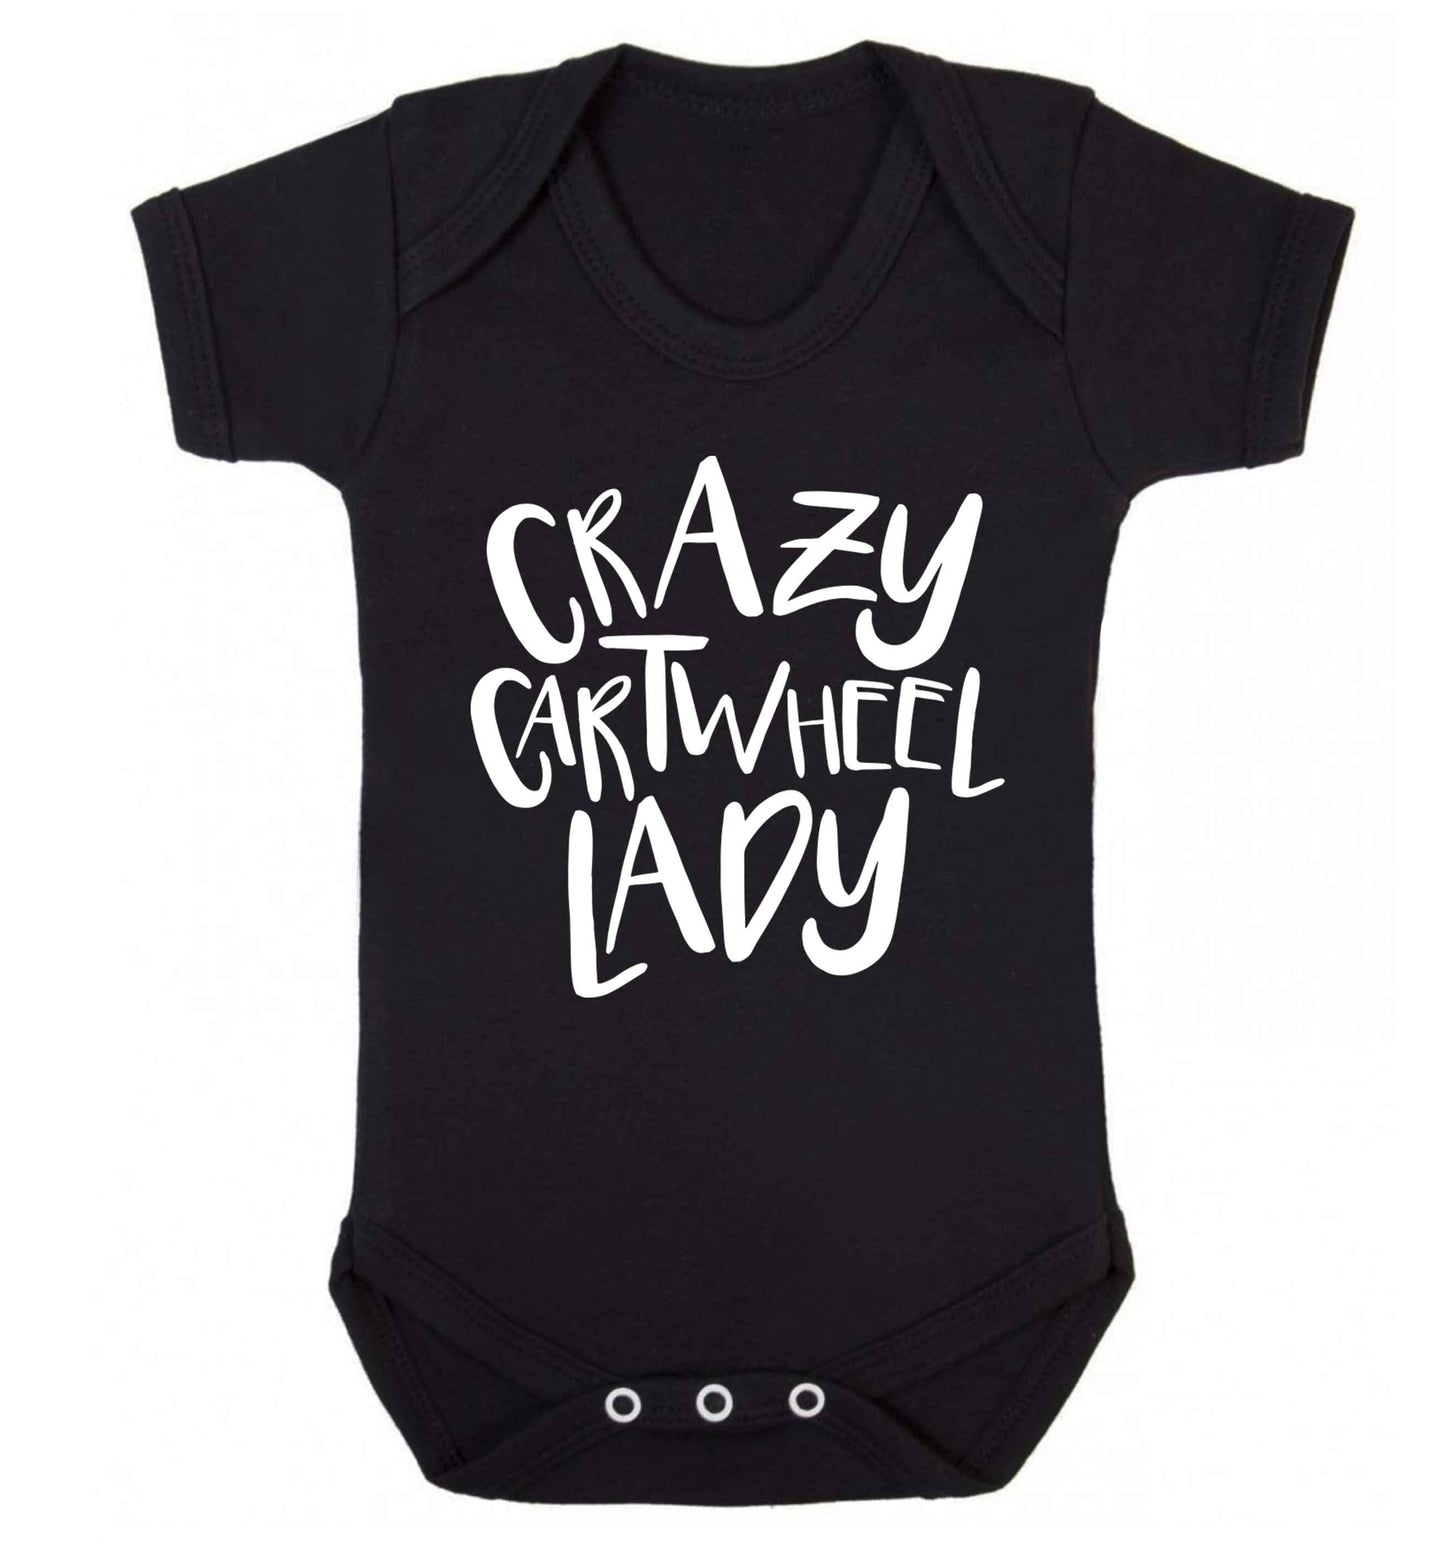 Crazy cartwheel lady Baby Vest black 18-24 months